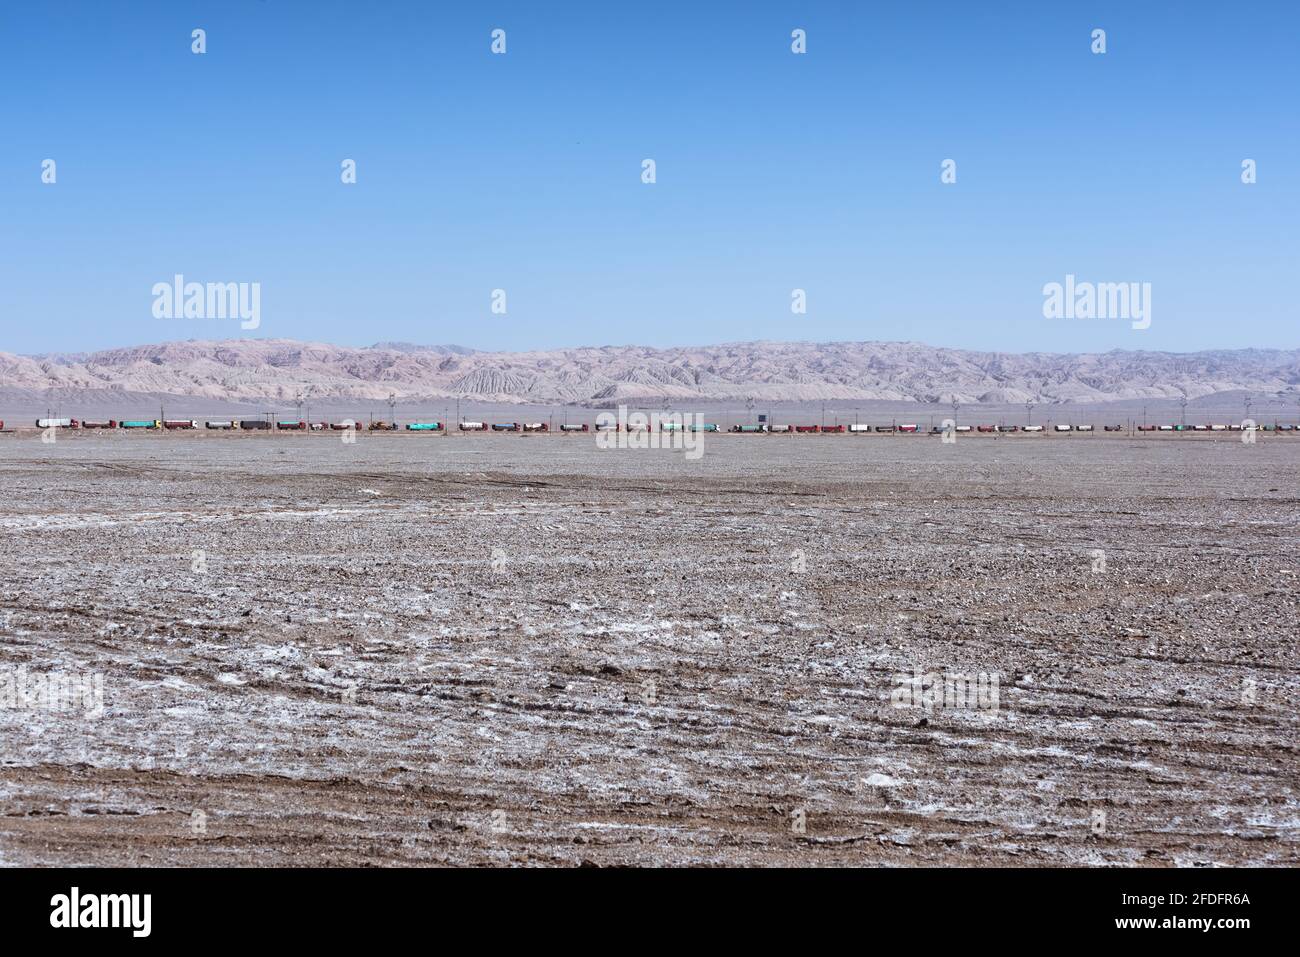 A major traffic jam on the highway on the Gobi Desert in northwest China Stock Photo